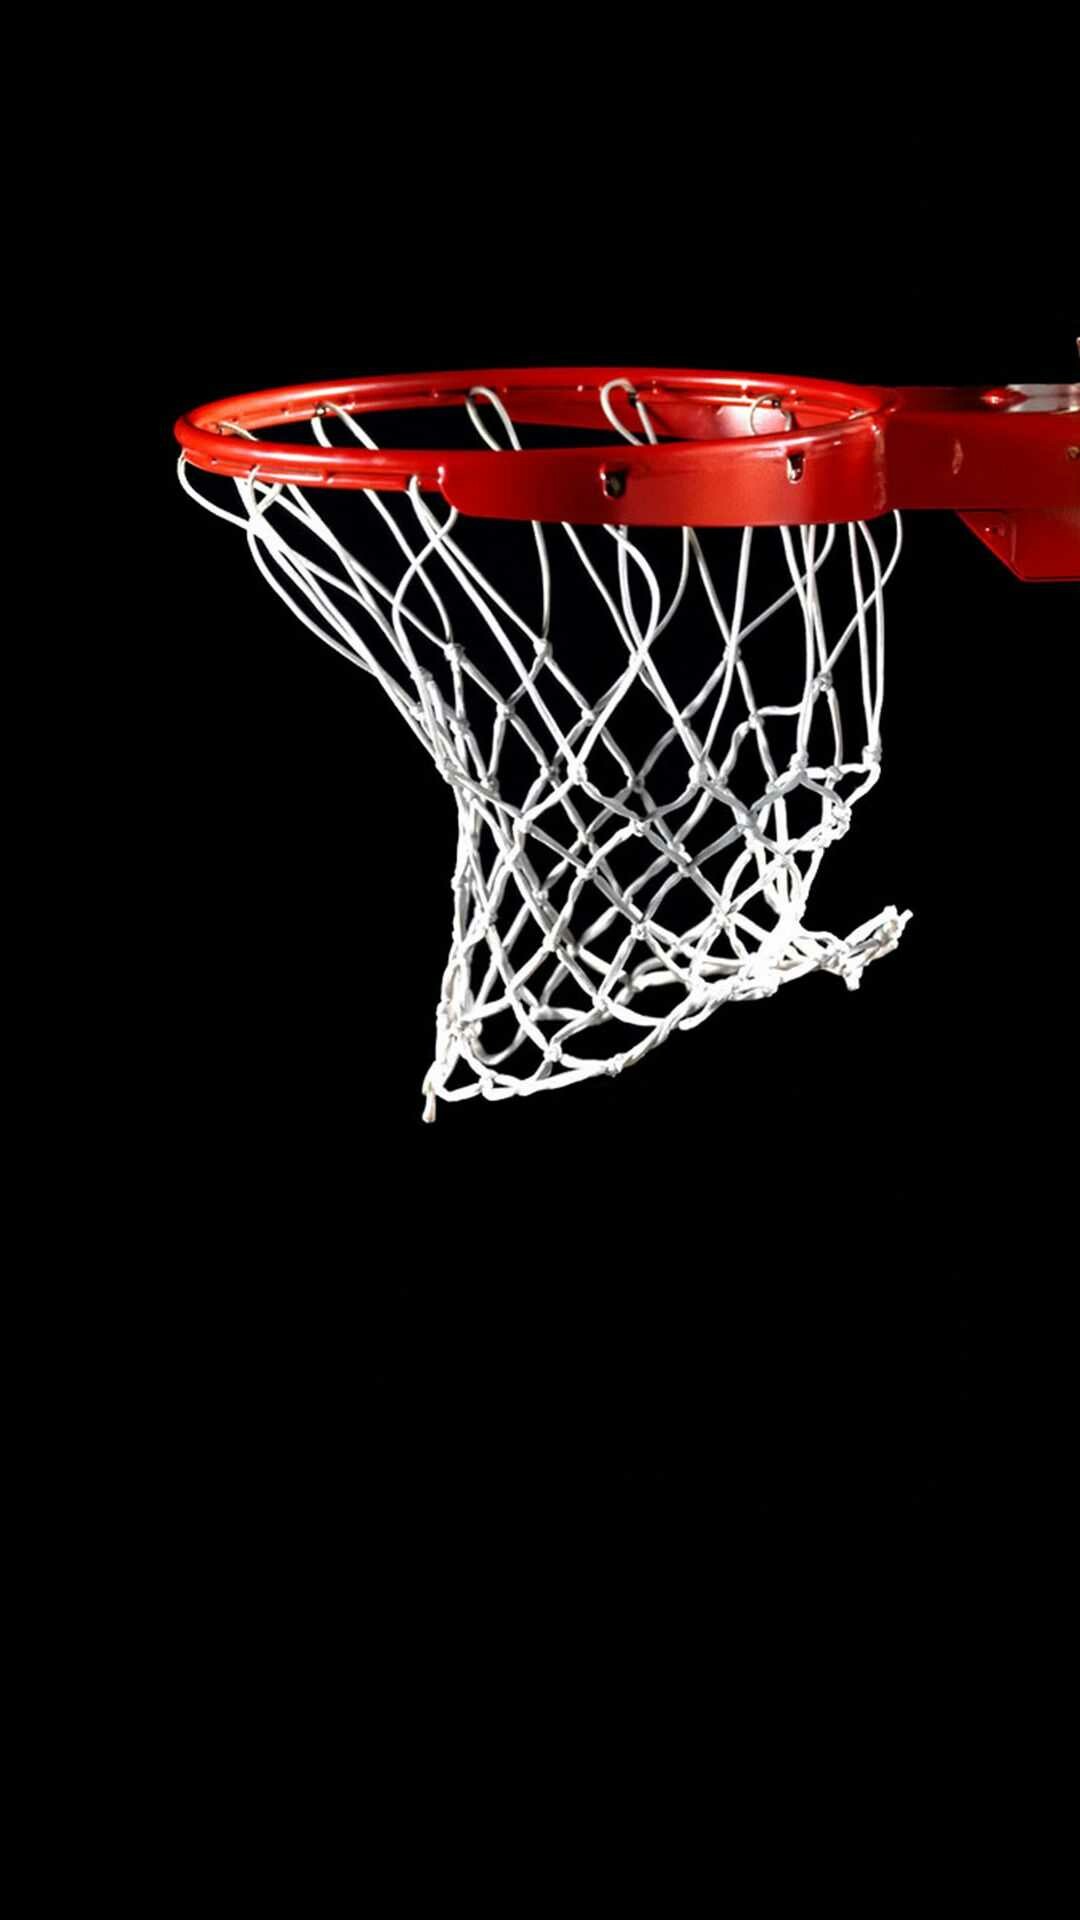 Basketball wallpaper, High-resolution image, Sports enthusiasm, Dynamic gameplay, 1080x1920 Full HD Handy